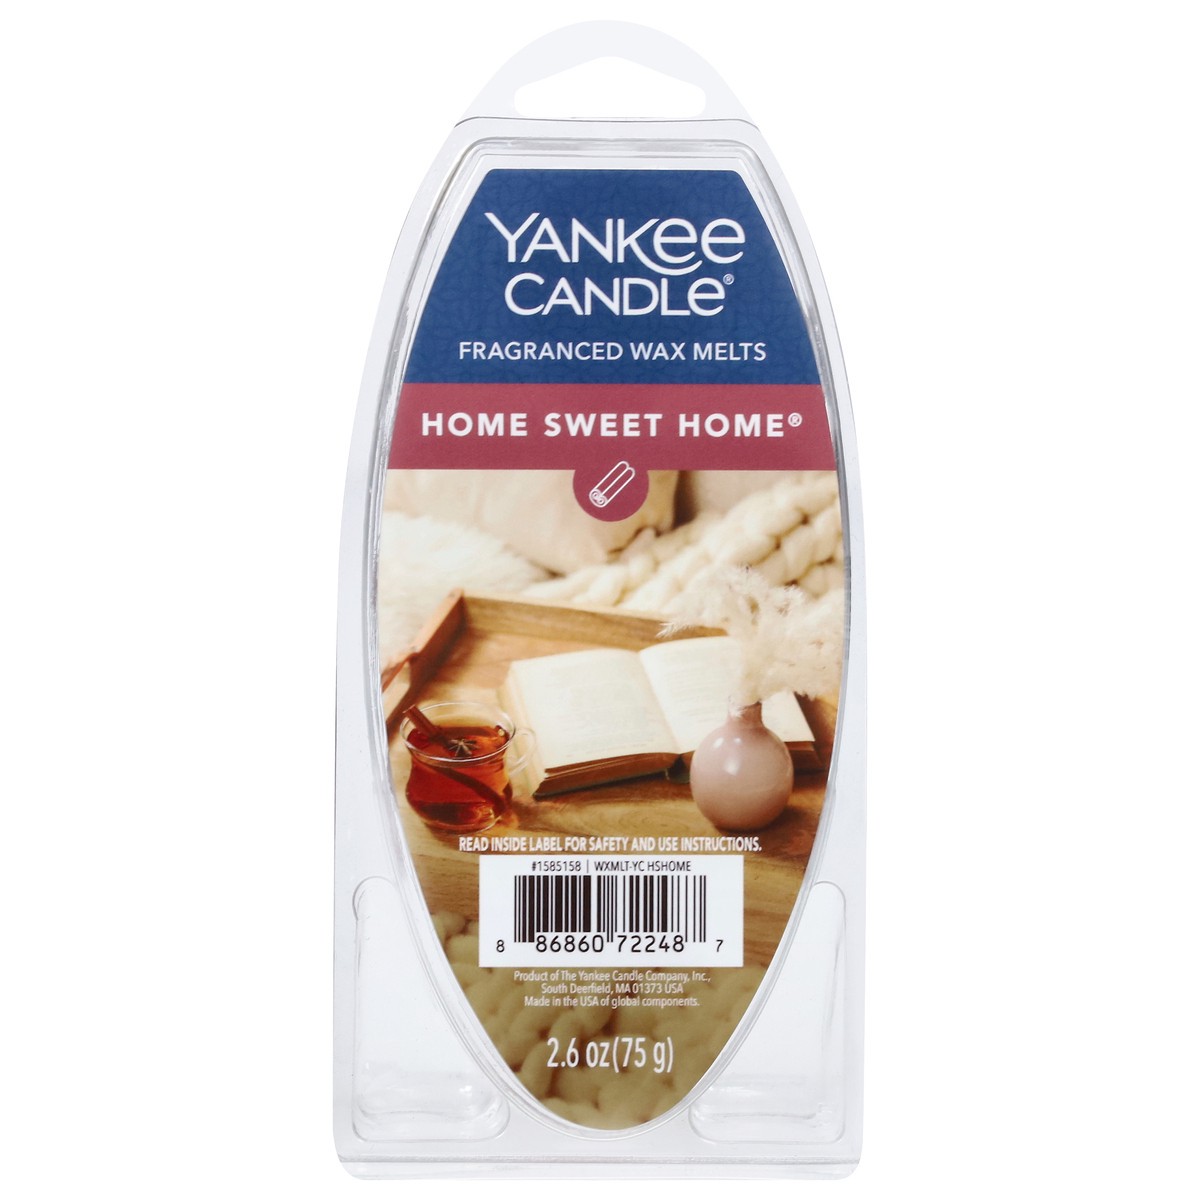 slide 1 of 9, Yankee Candle Fragranced Home Sweet Home Wax Melts 2.6 oz, 2.6 oz